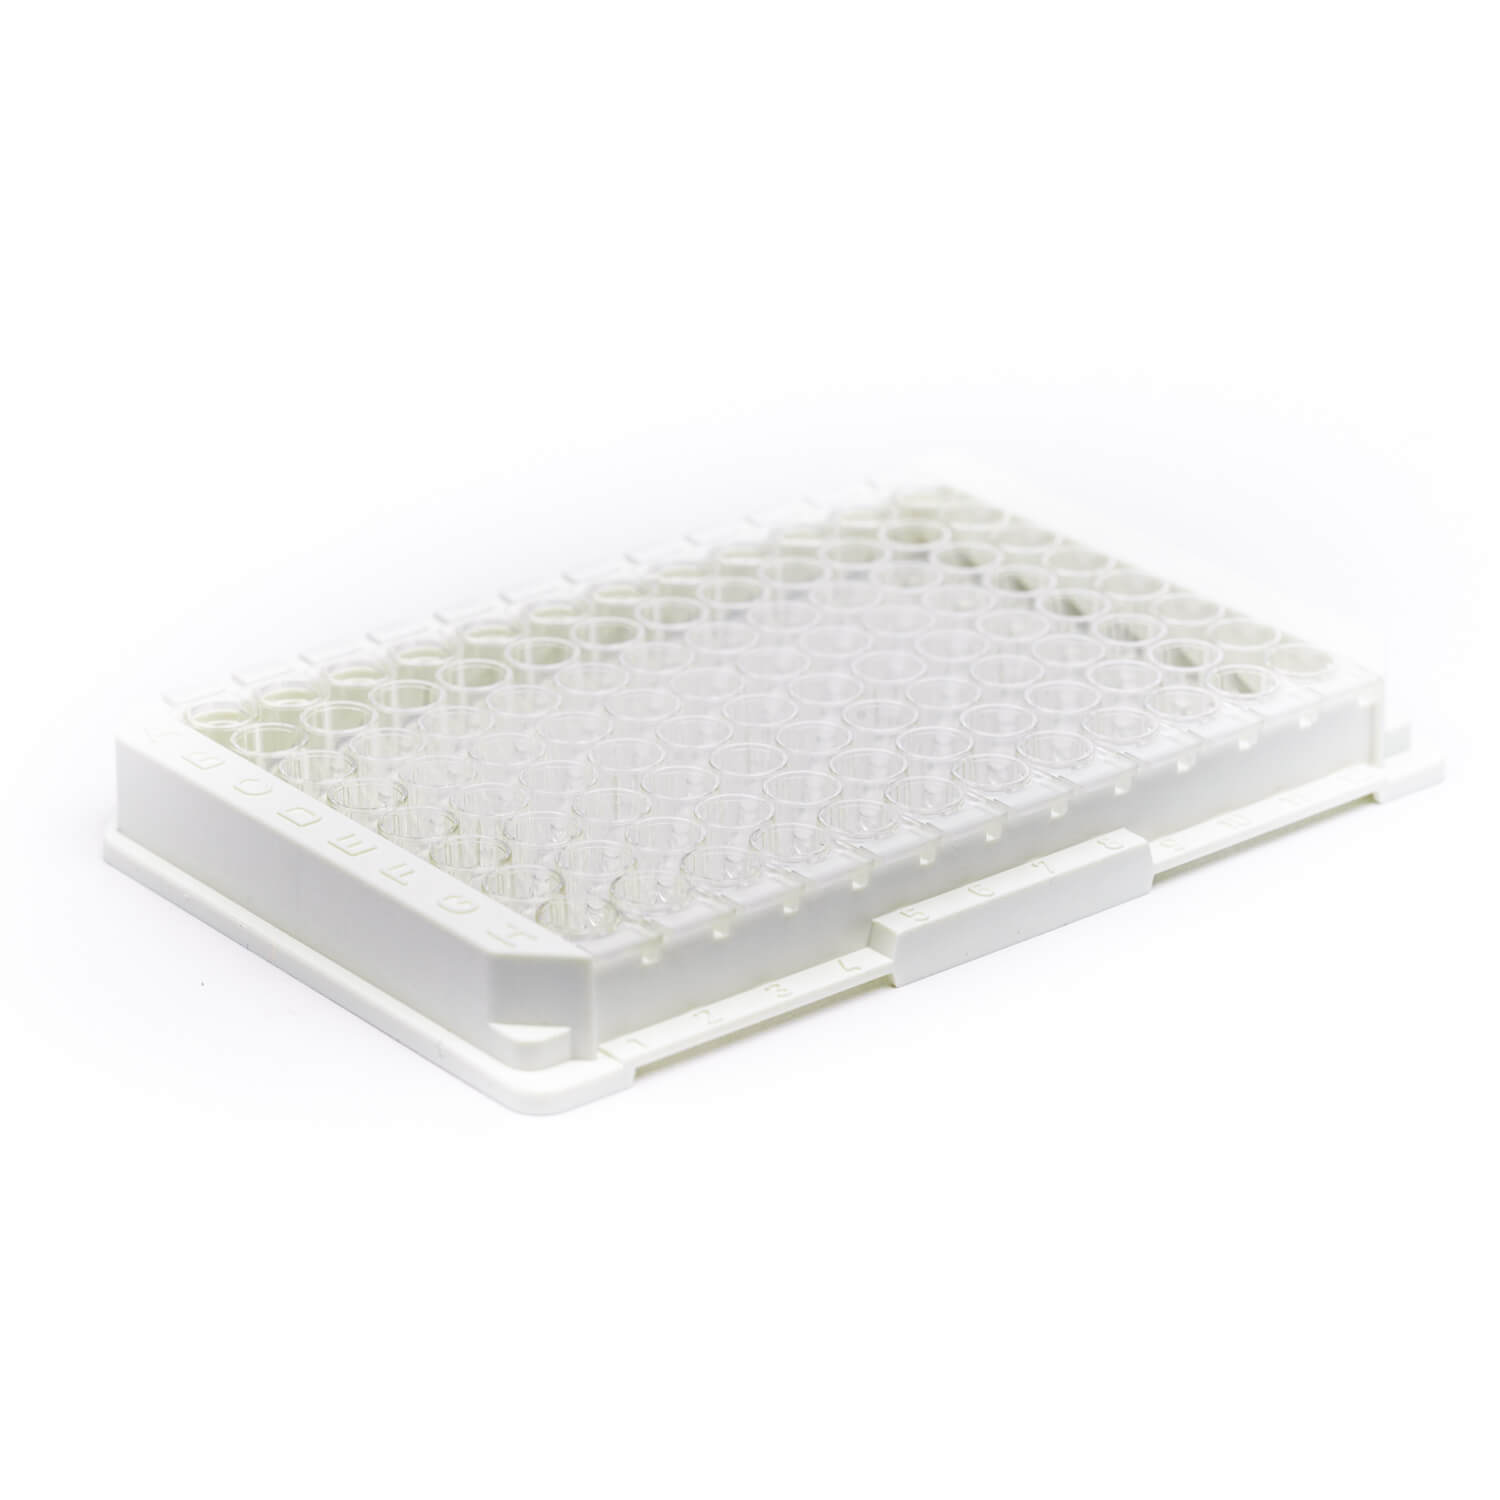 Strep-Tactin® coated microplate